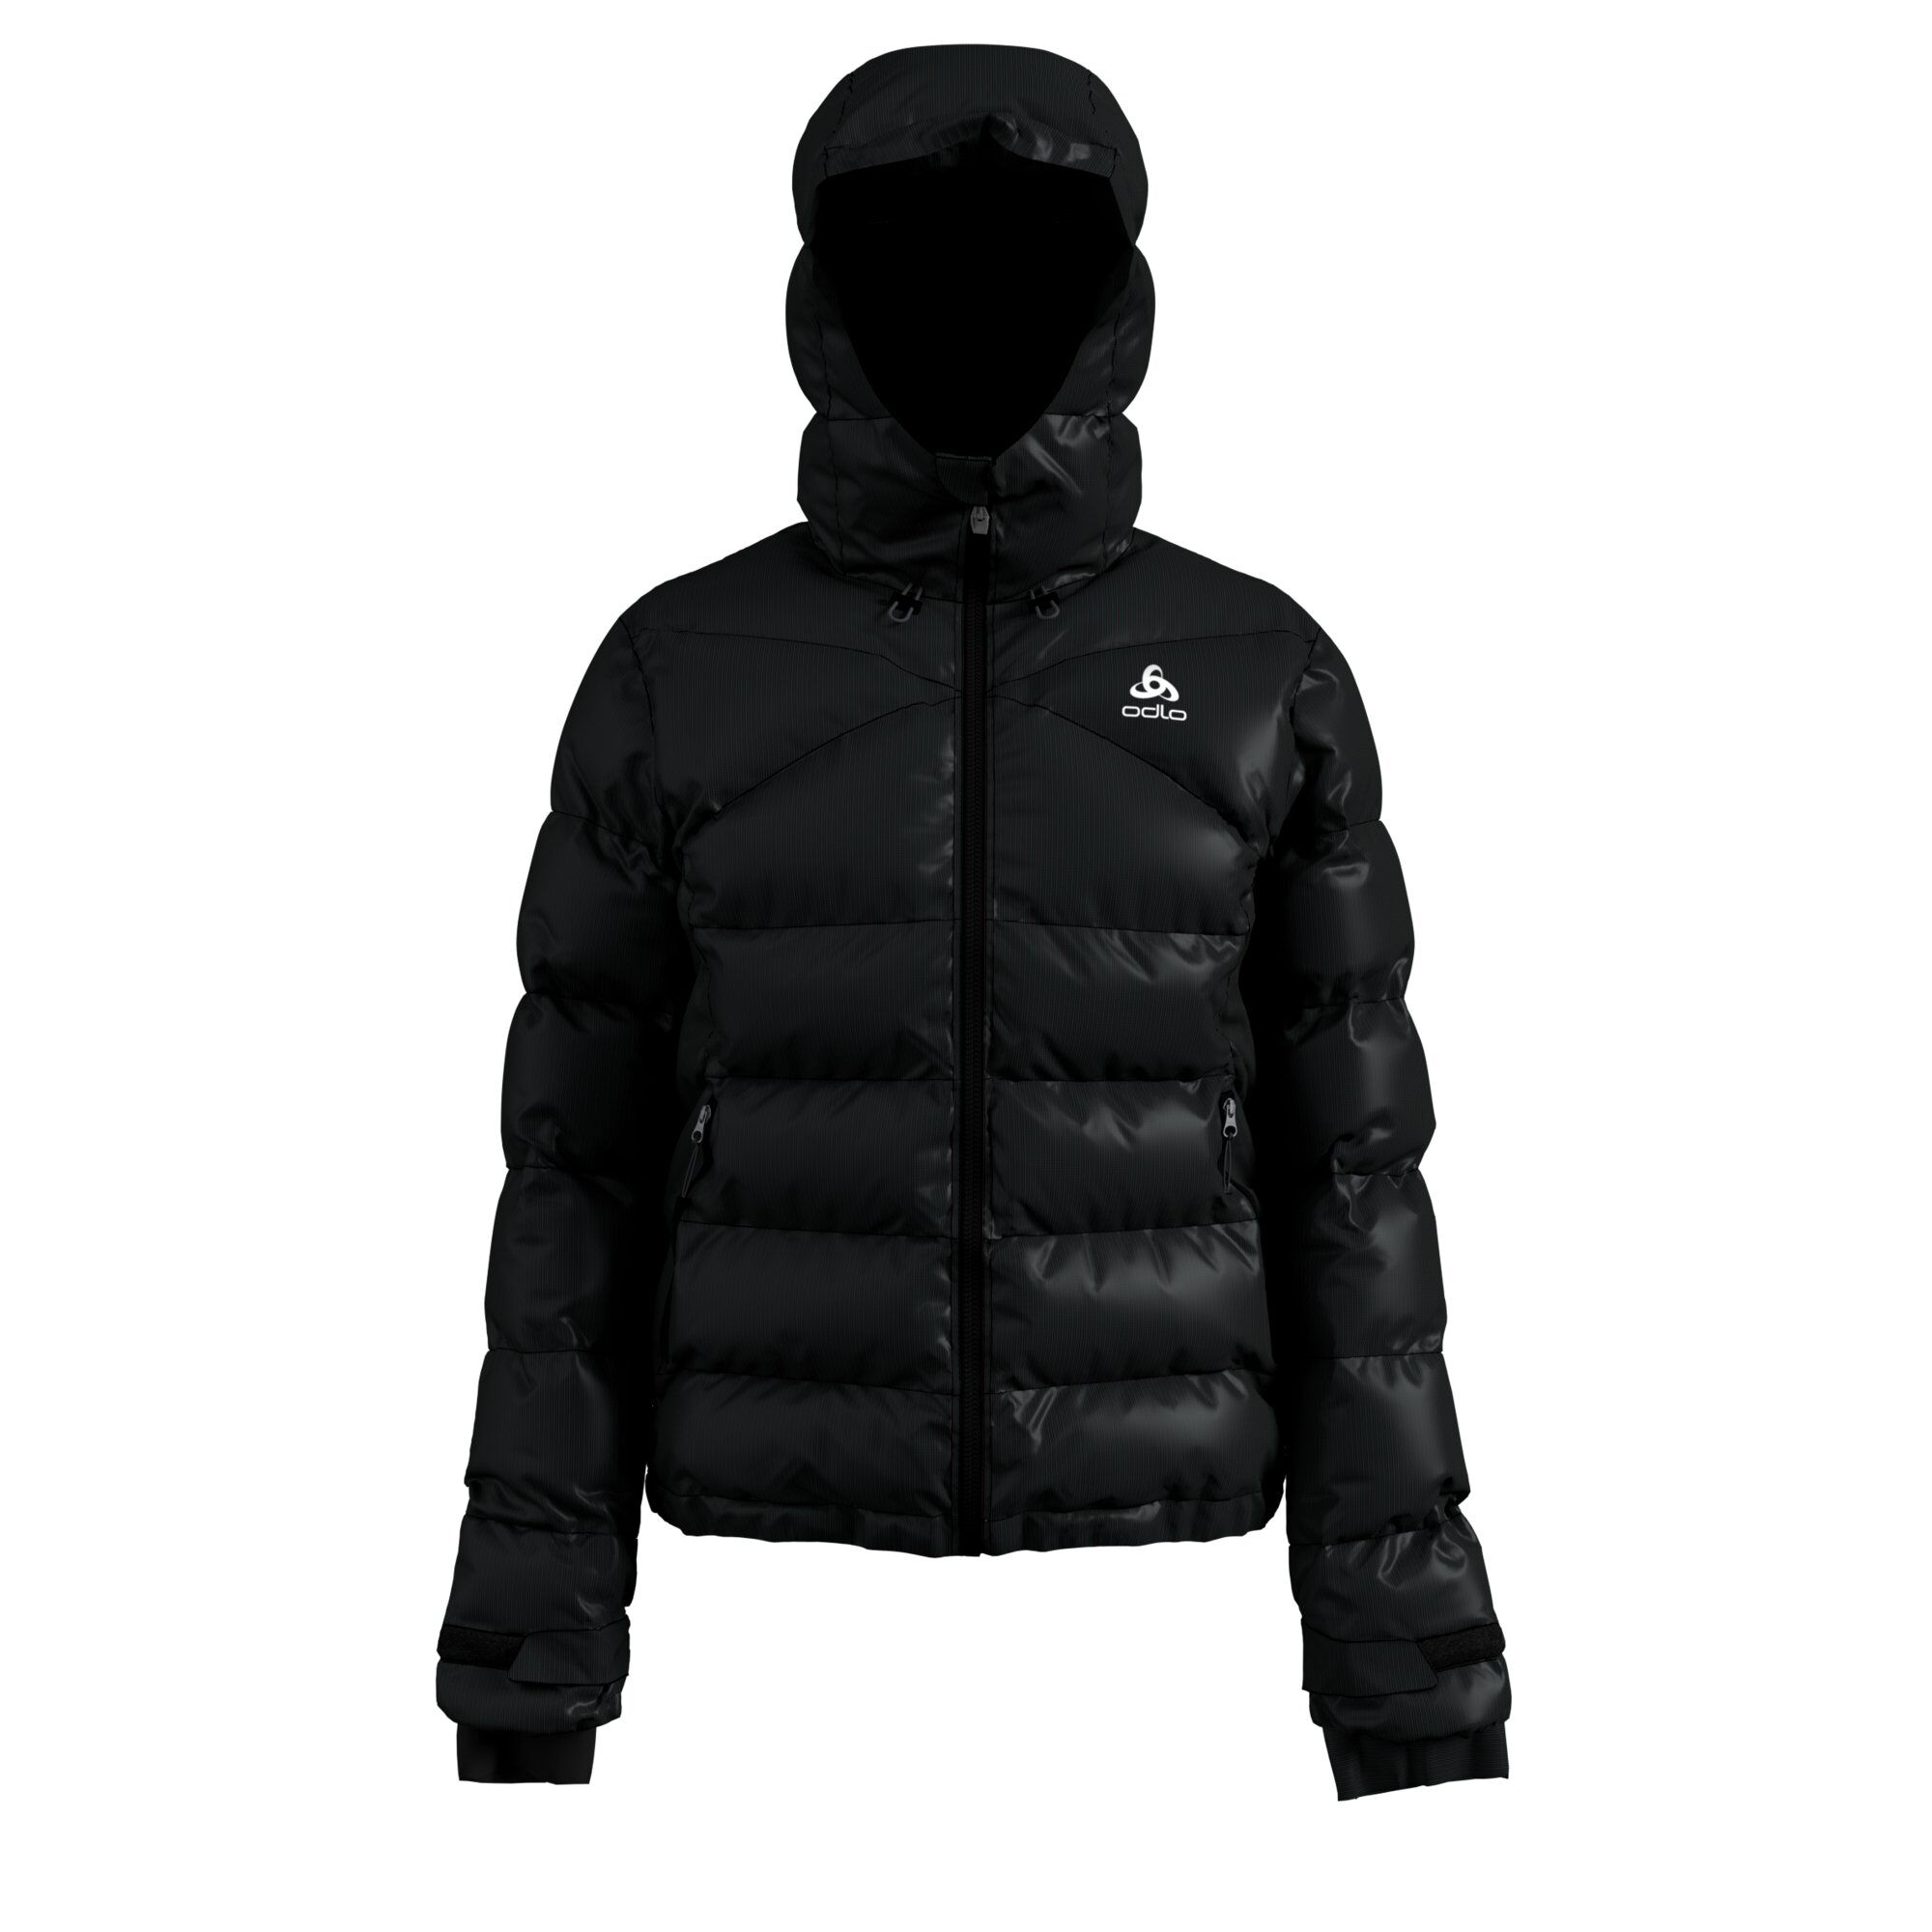 Odlo Cocoon N-Thermic X-Warm Jacket Insulated - Down jacket - Women's